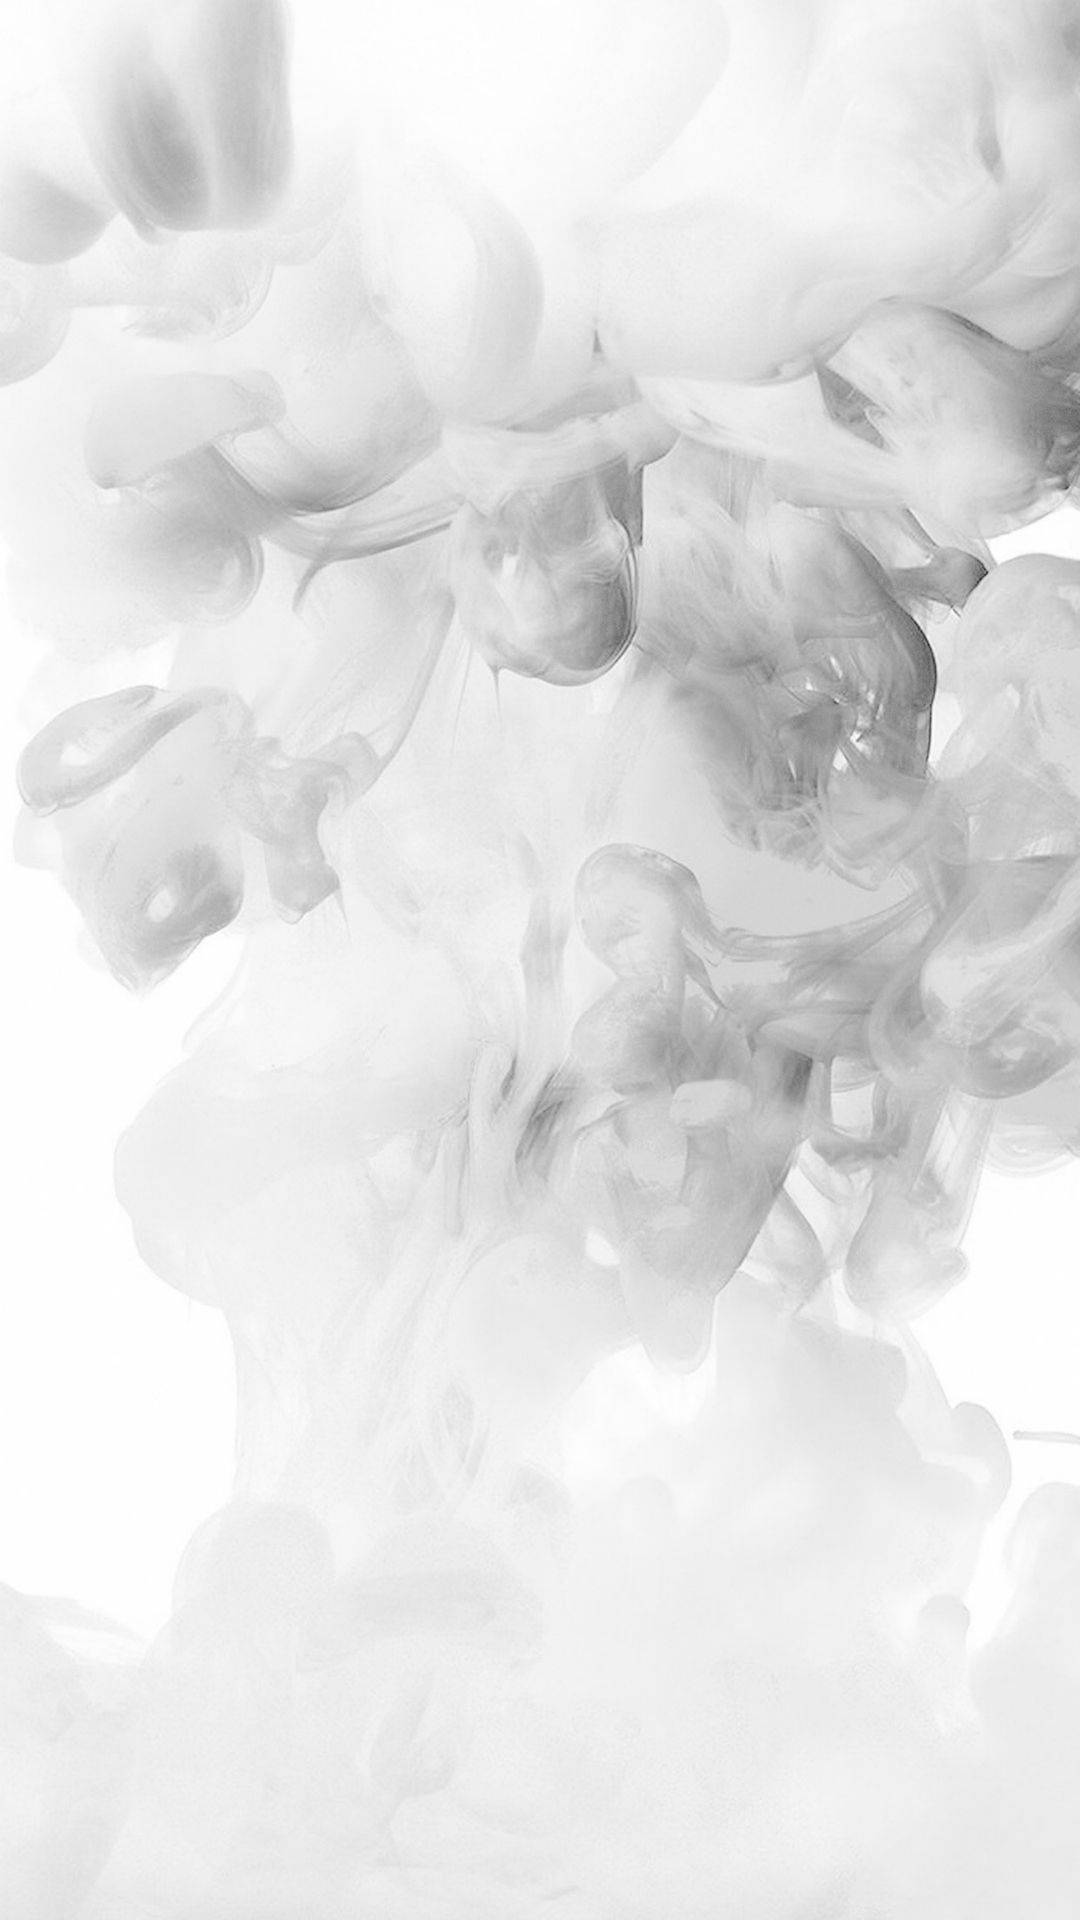 Cool Iphone White Smoke Wallpaper